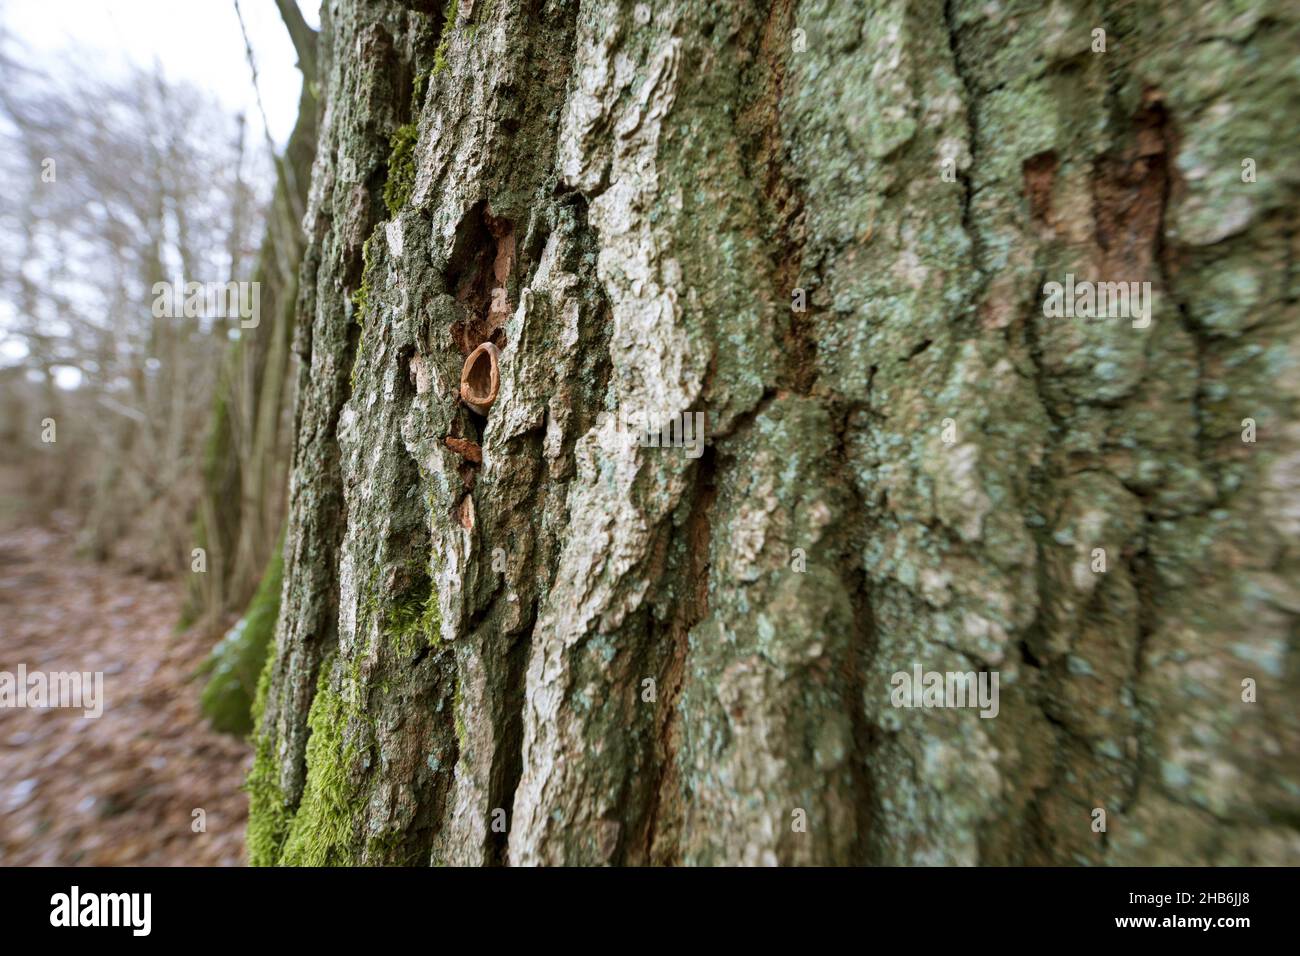 hazelnut (Corylus avellana), A woodpecker or nuthatch wedged a hazelnut into bark, opened and fed it, Germany Stock Photo